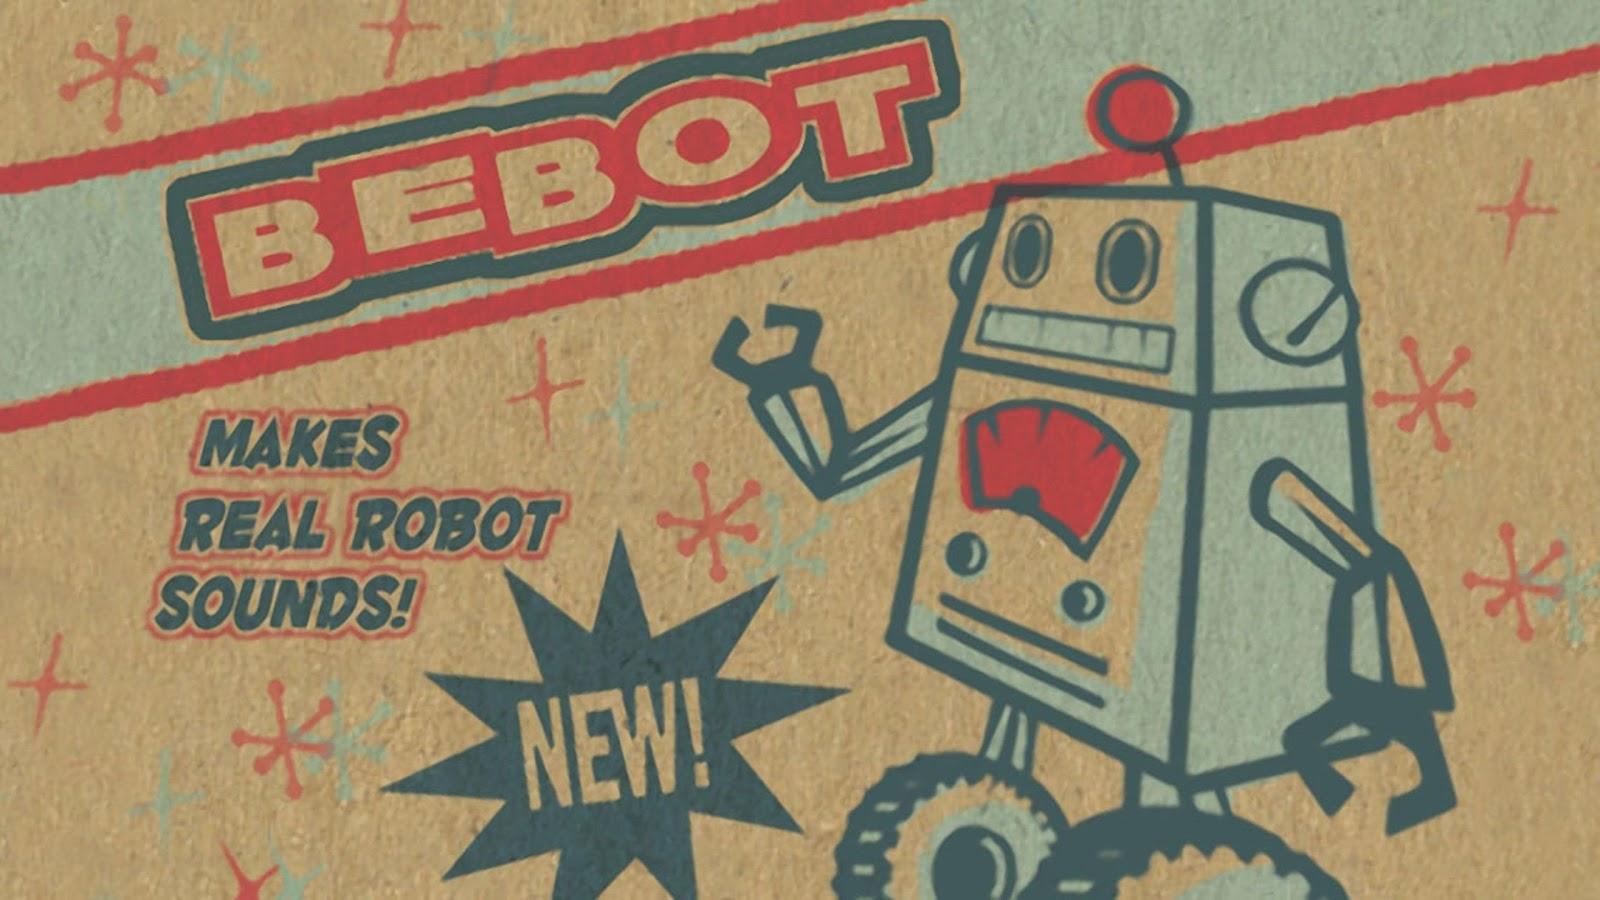 bebot bebot mp3 free download